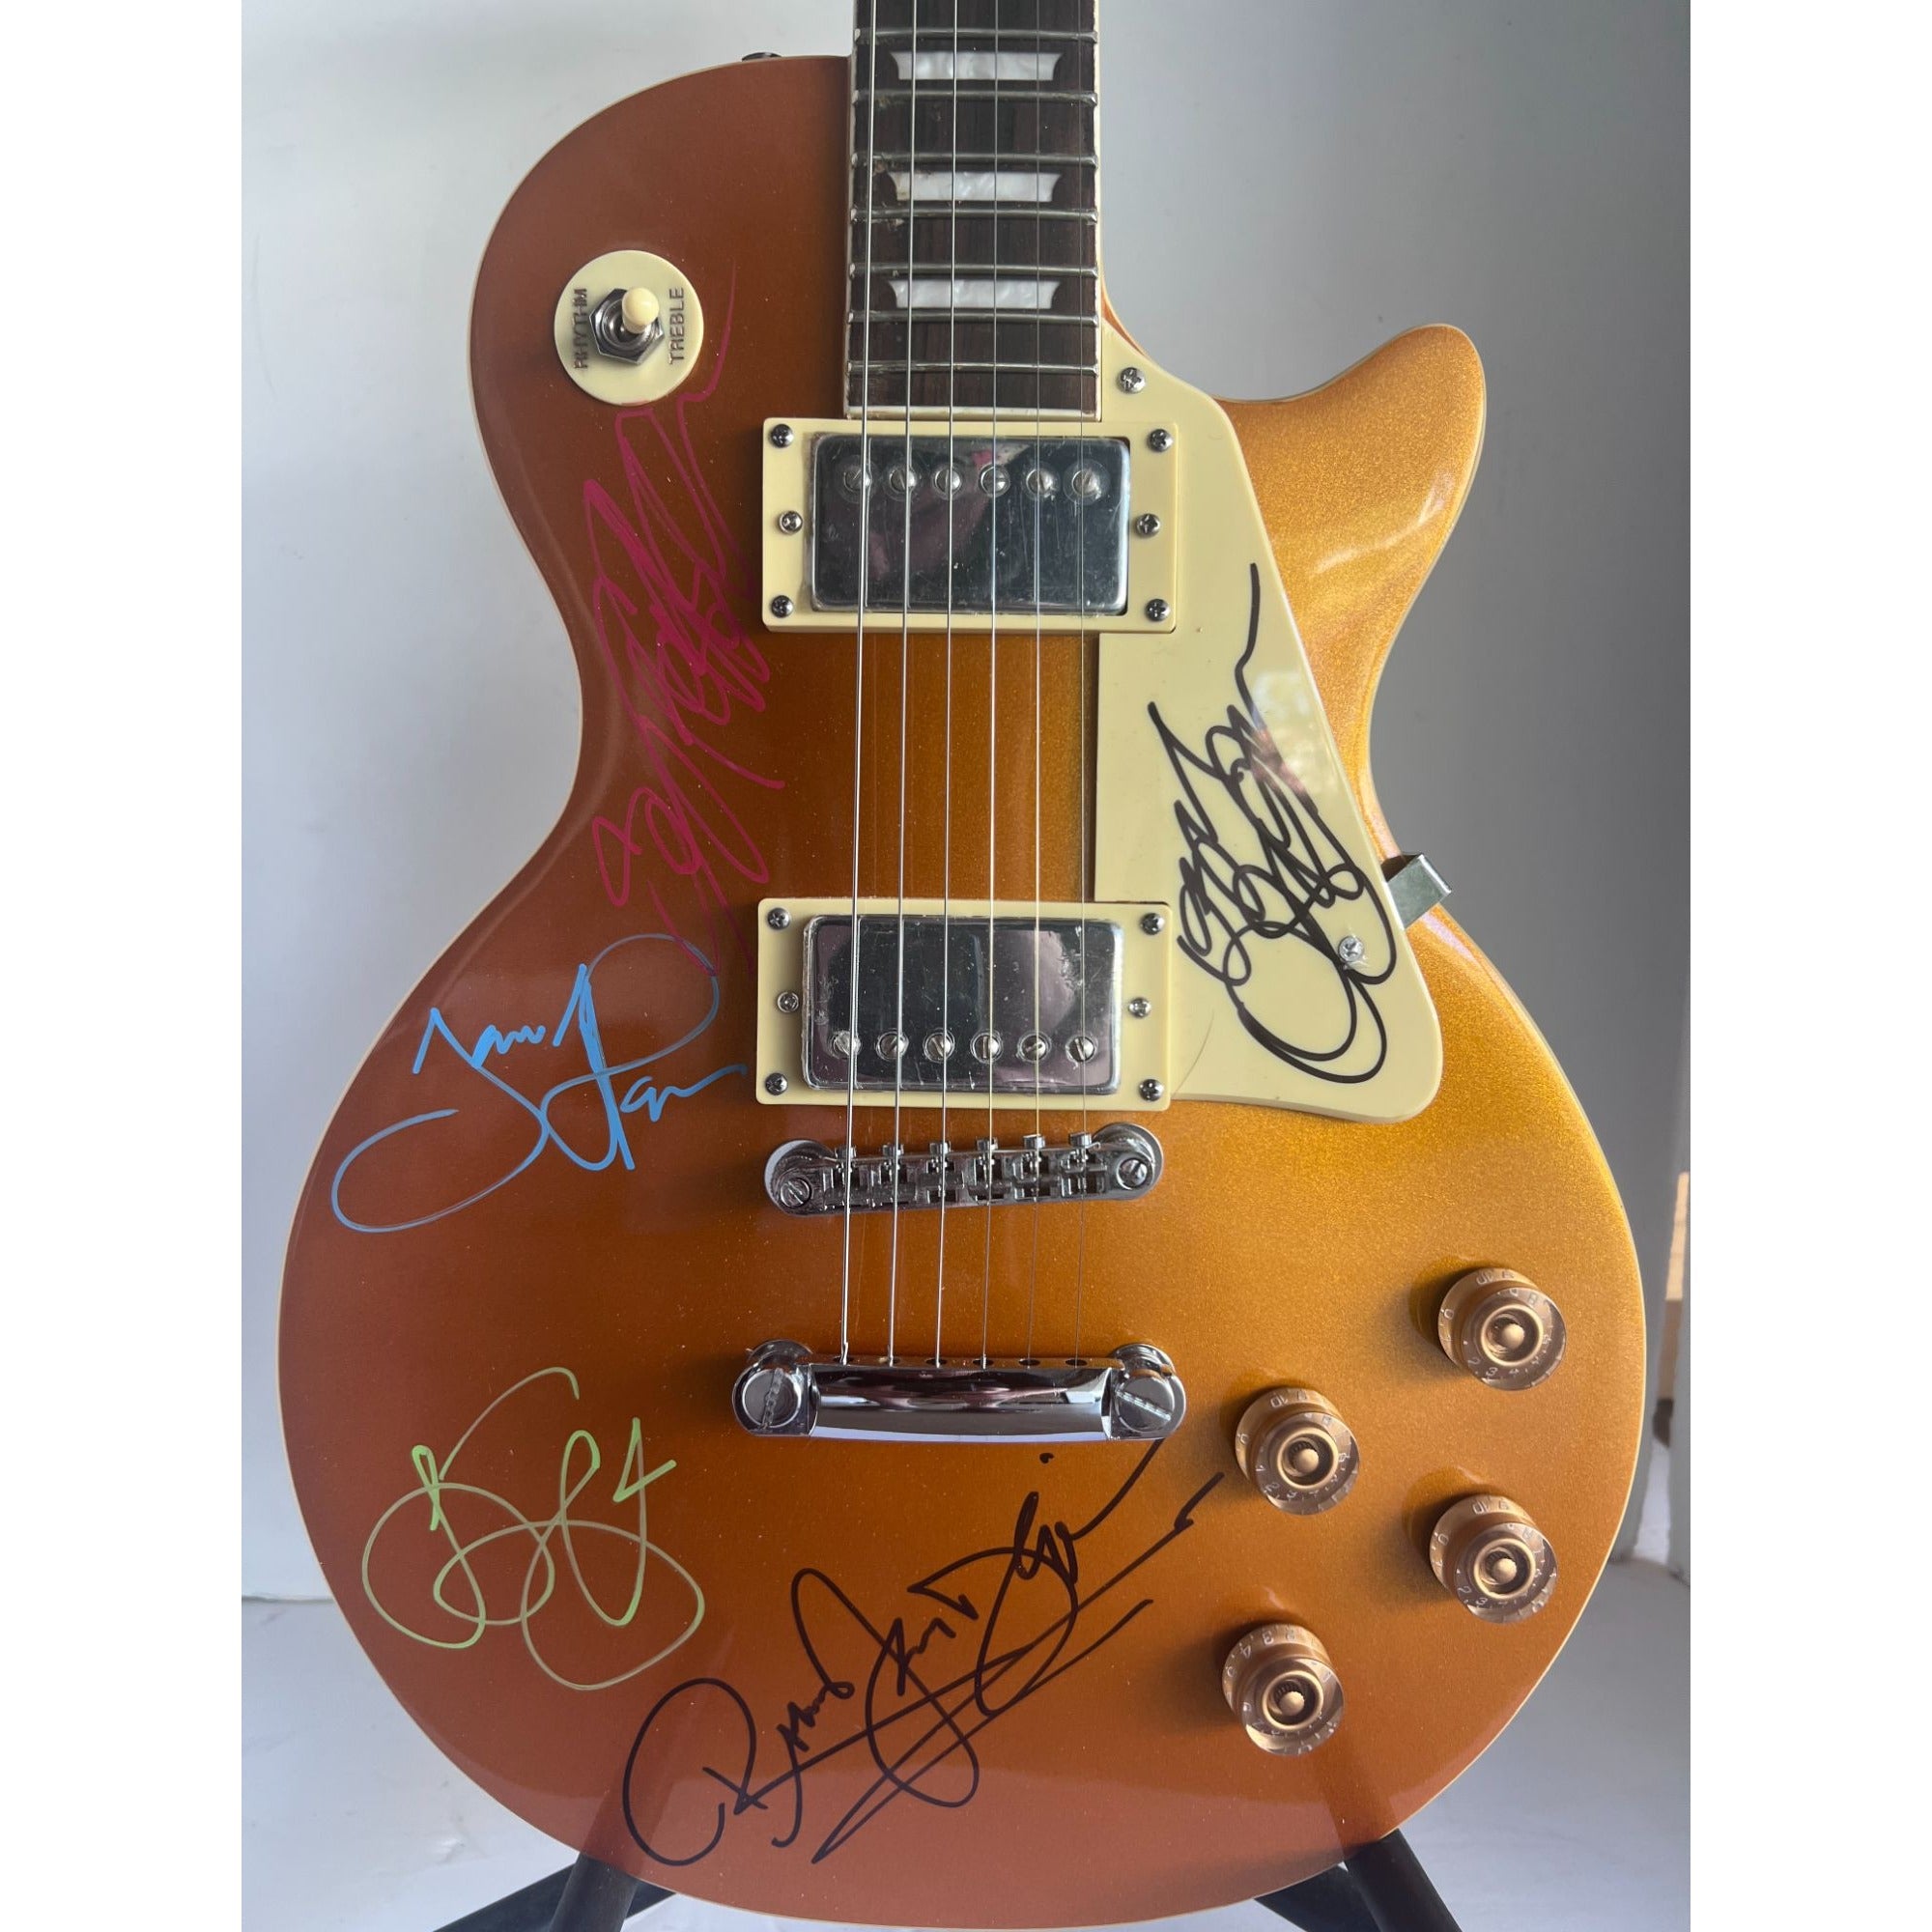 Ronnie James Dio, Ozzy Osbourne, Tony Iommi, Black Sabbath Les Paul style guitar signed with proof